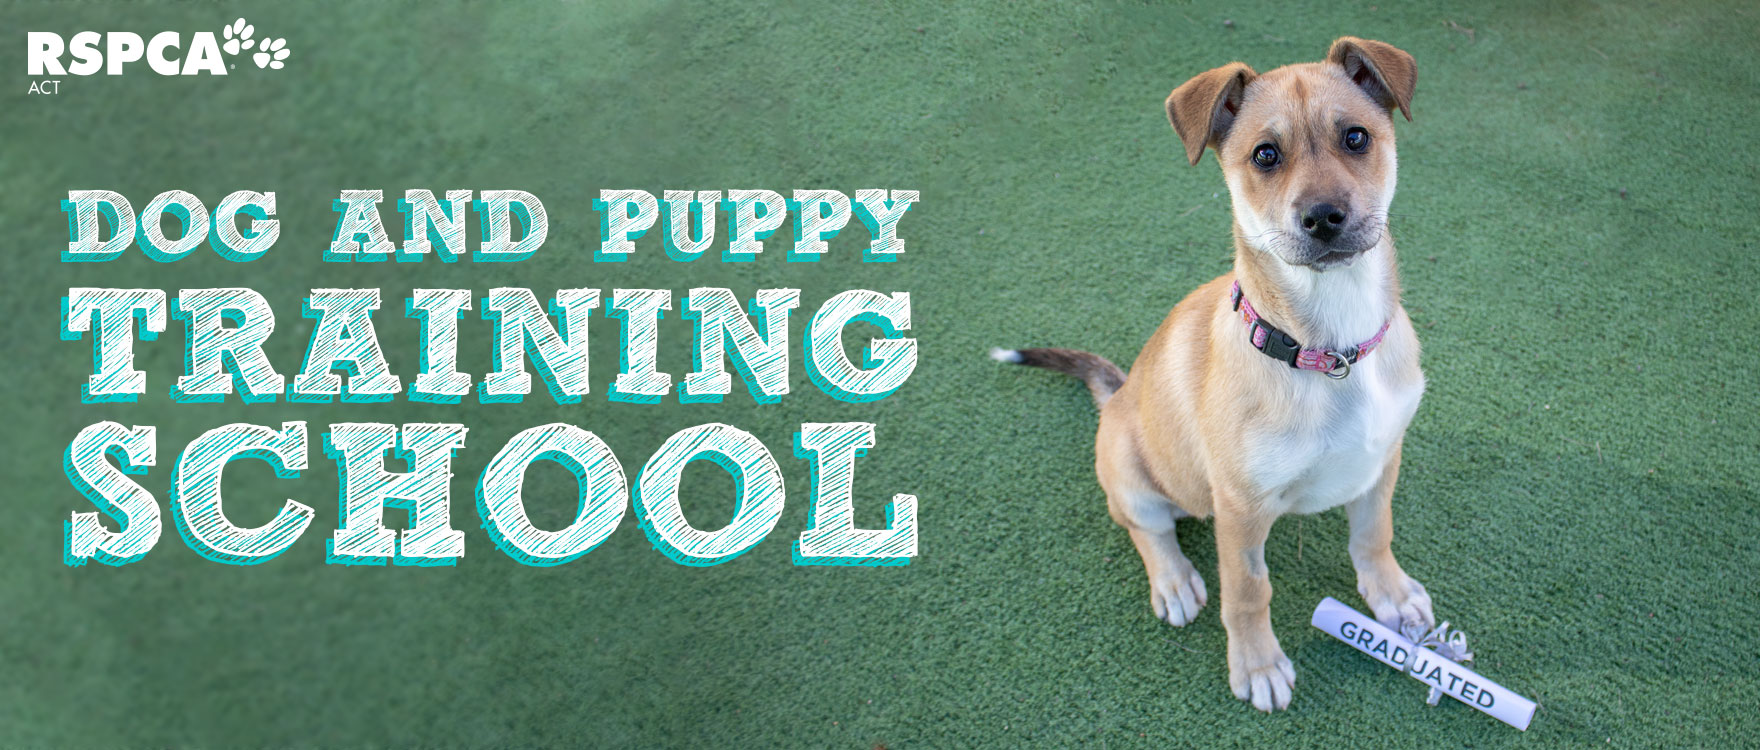 Dog and Puppy Training School